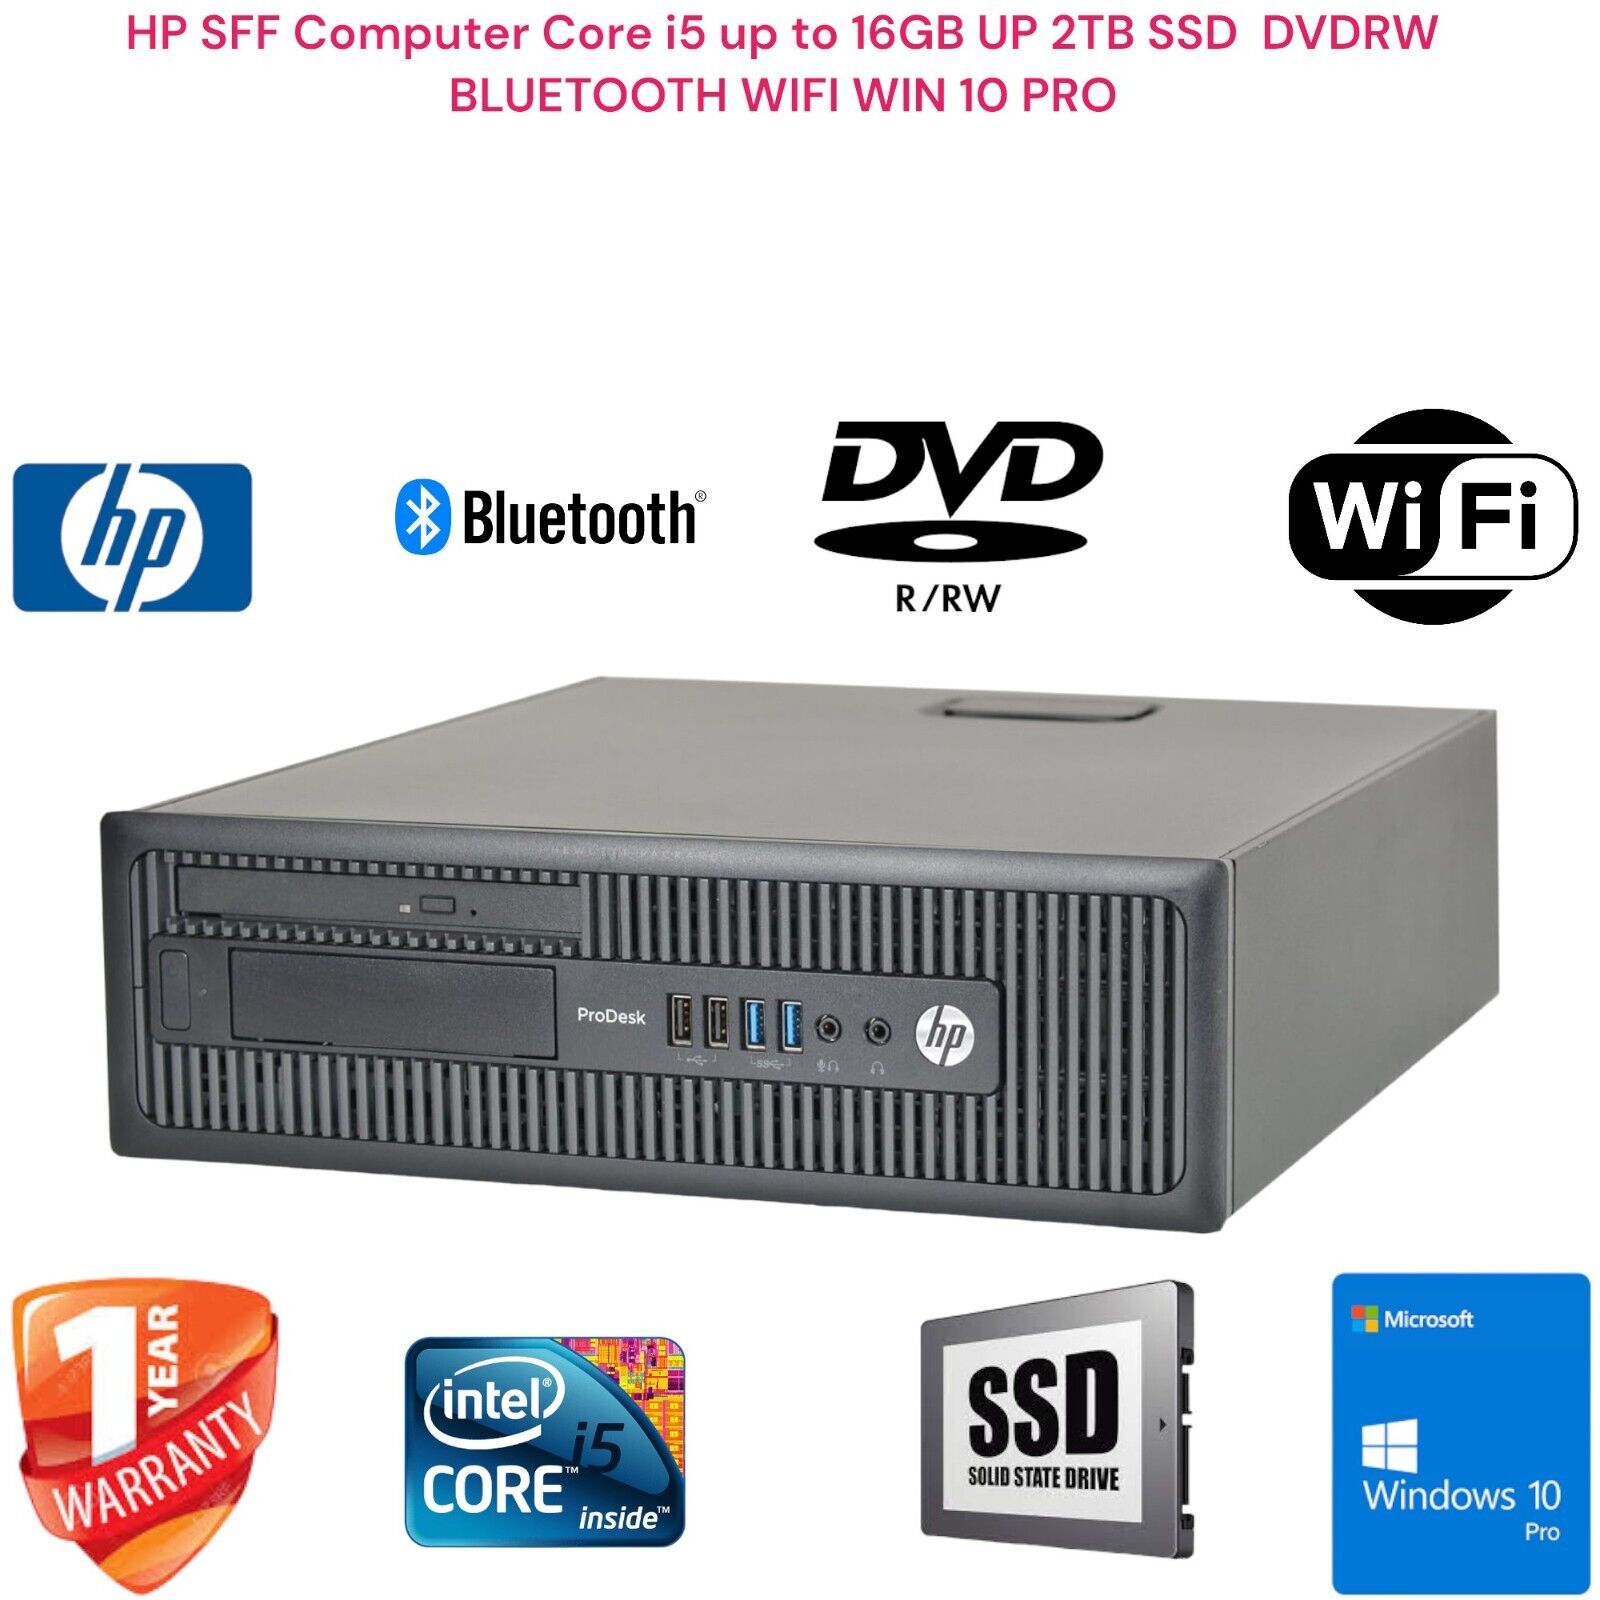 HP SFF Computer PC DESKTOP  i5 UP TO 16GB 2TB SSD DVDRW WIN 10 PR WIFI BLUETOOTH